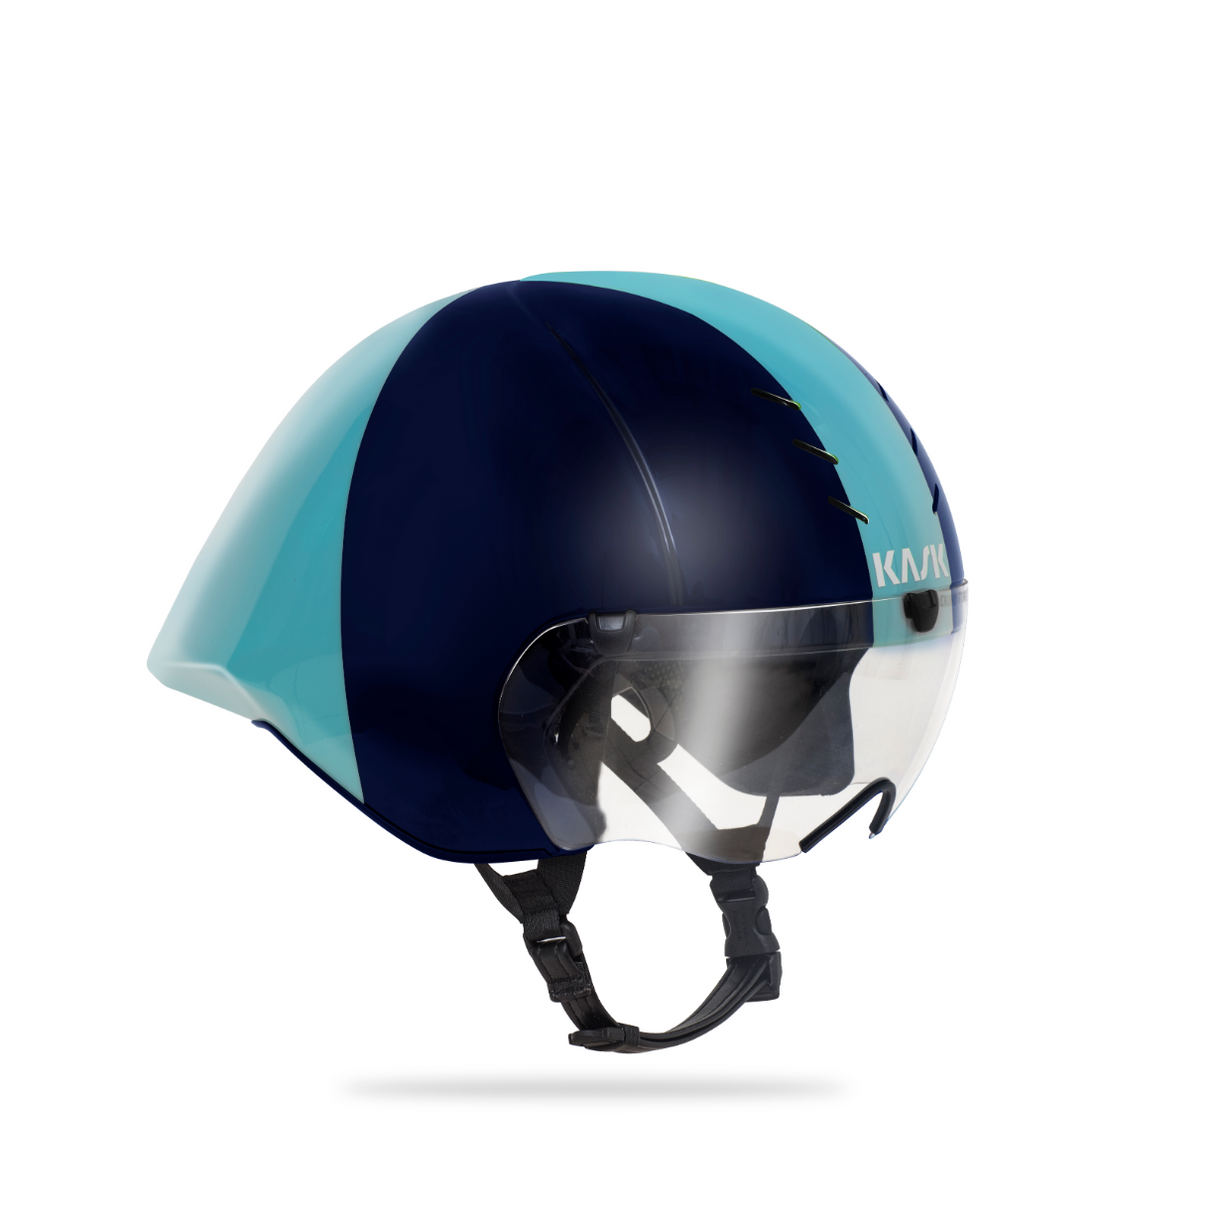 KASK Mistral Time Trial Cycling Helmet - Blue Navy/Light Blue- Medium